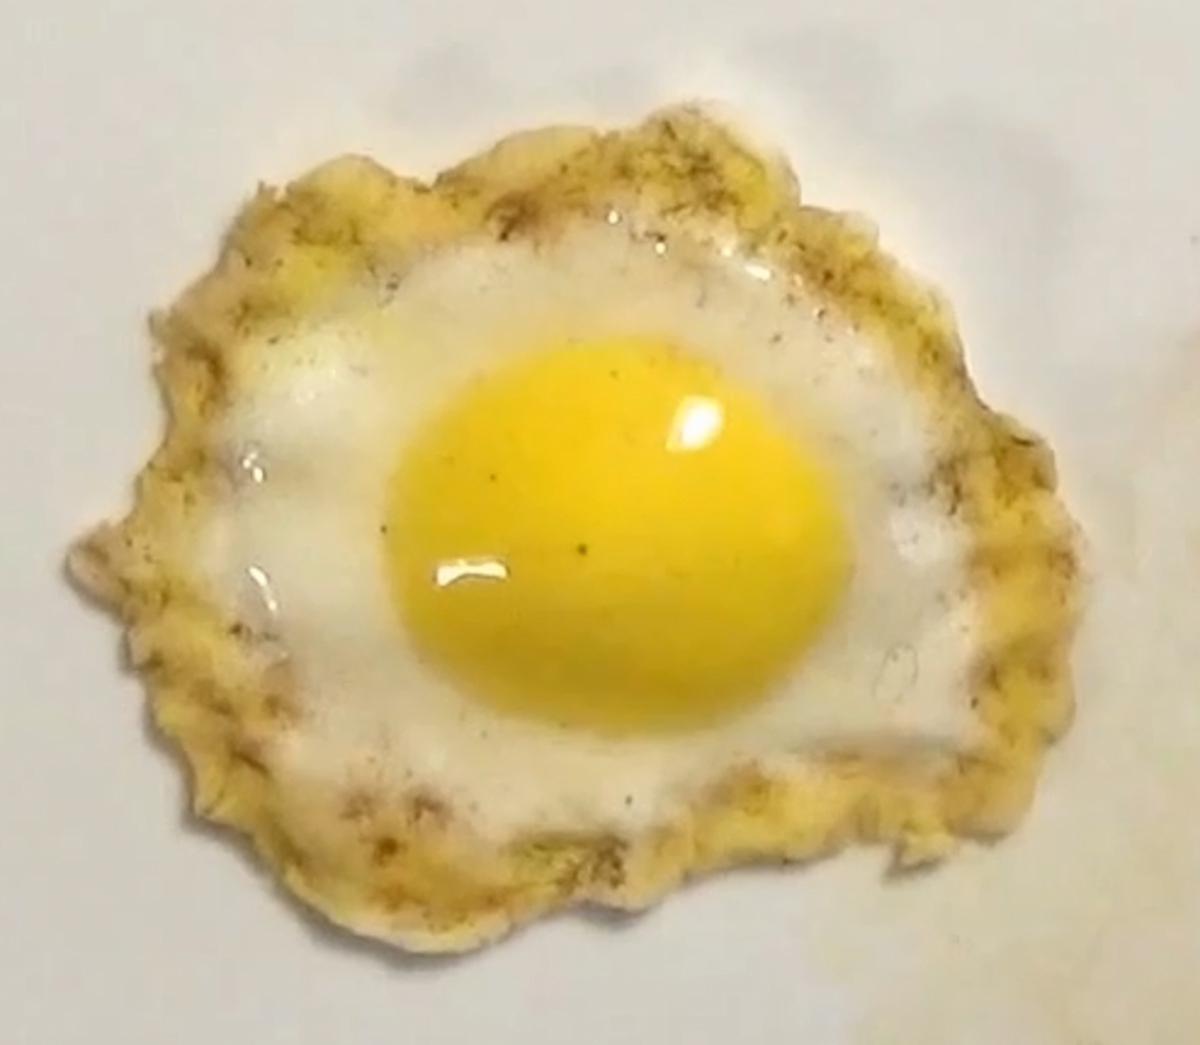 Clay Miniature Fried Egg